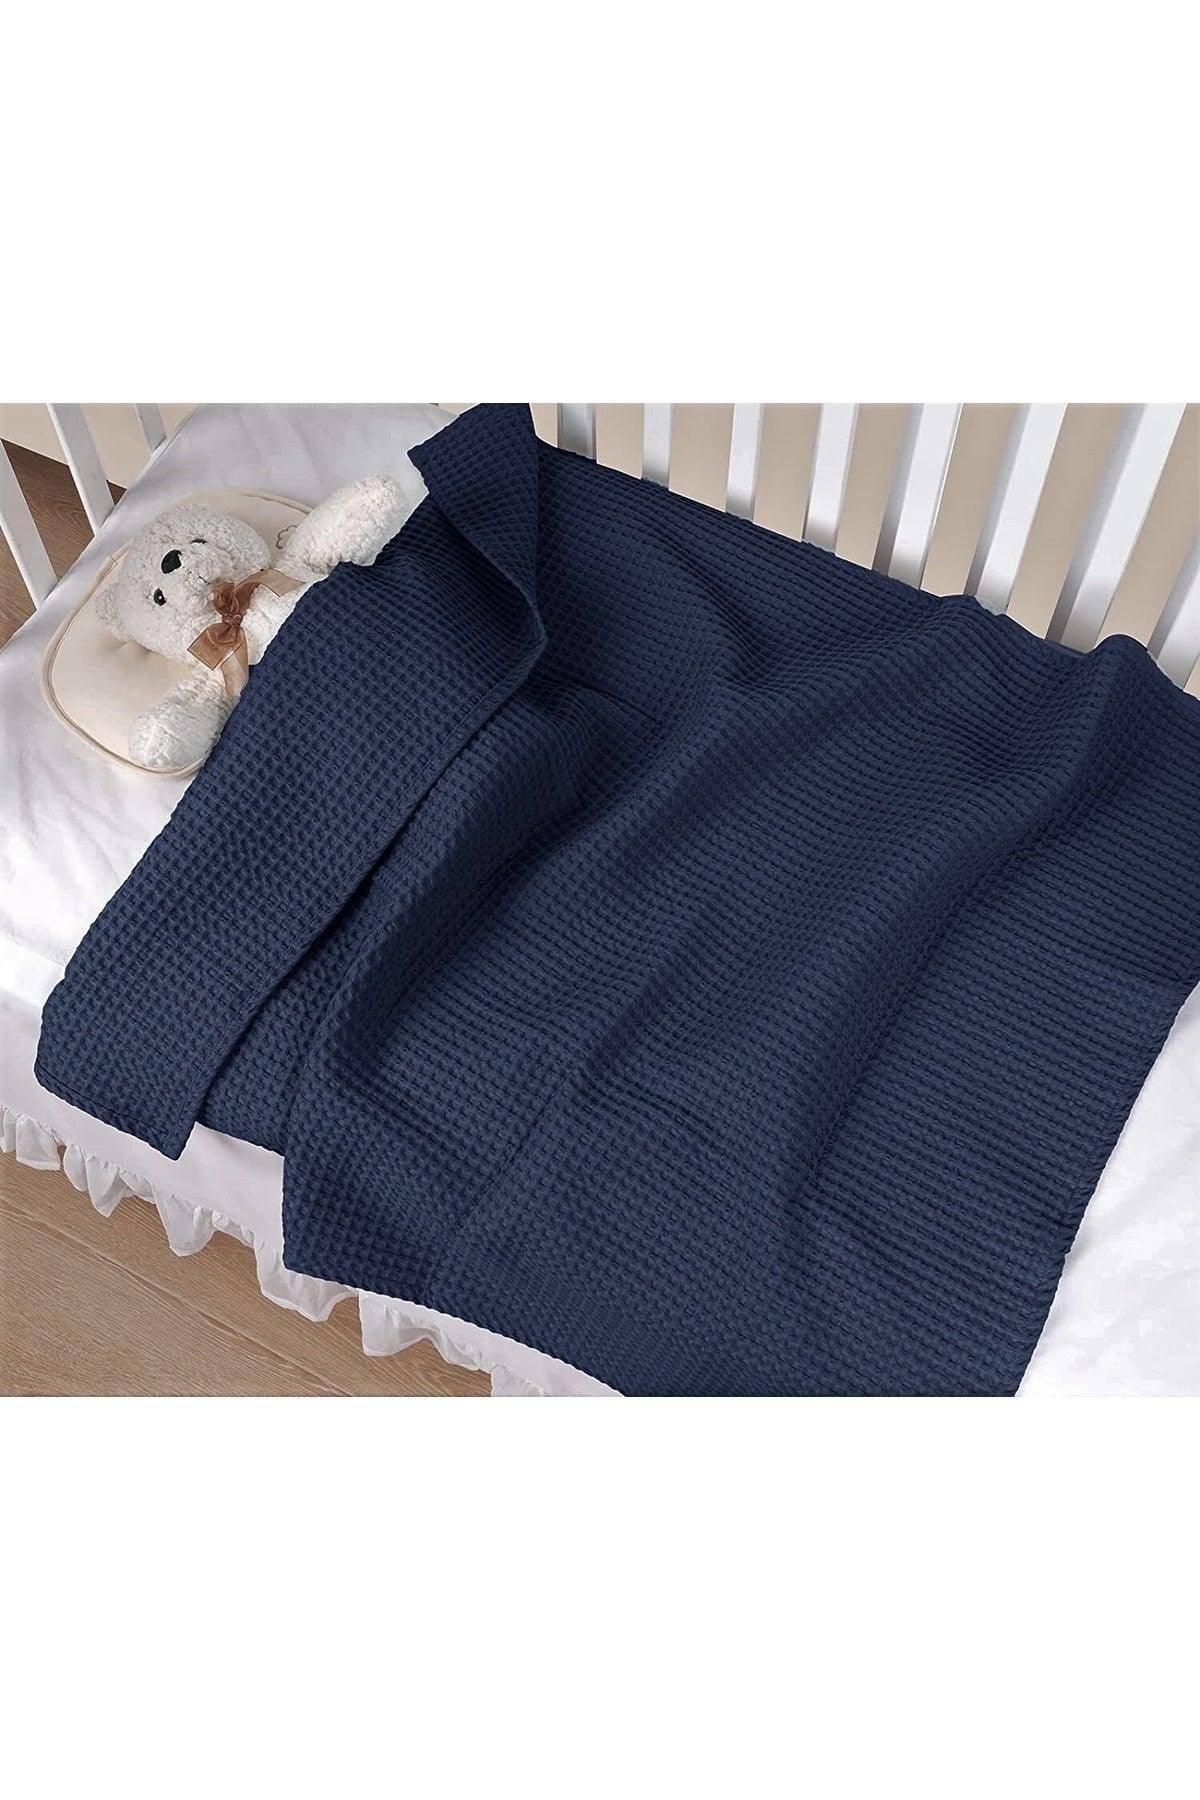 100% Cotton Waffle Blanket Ultra Soft 90x90 Navy Blue Pique - Swordslife